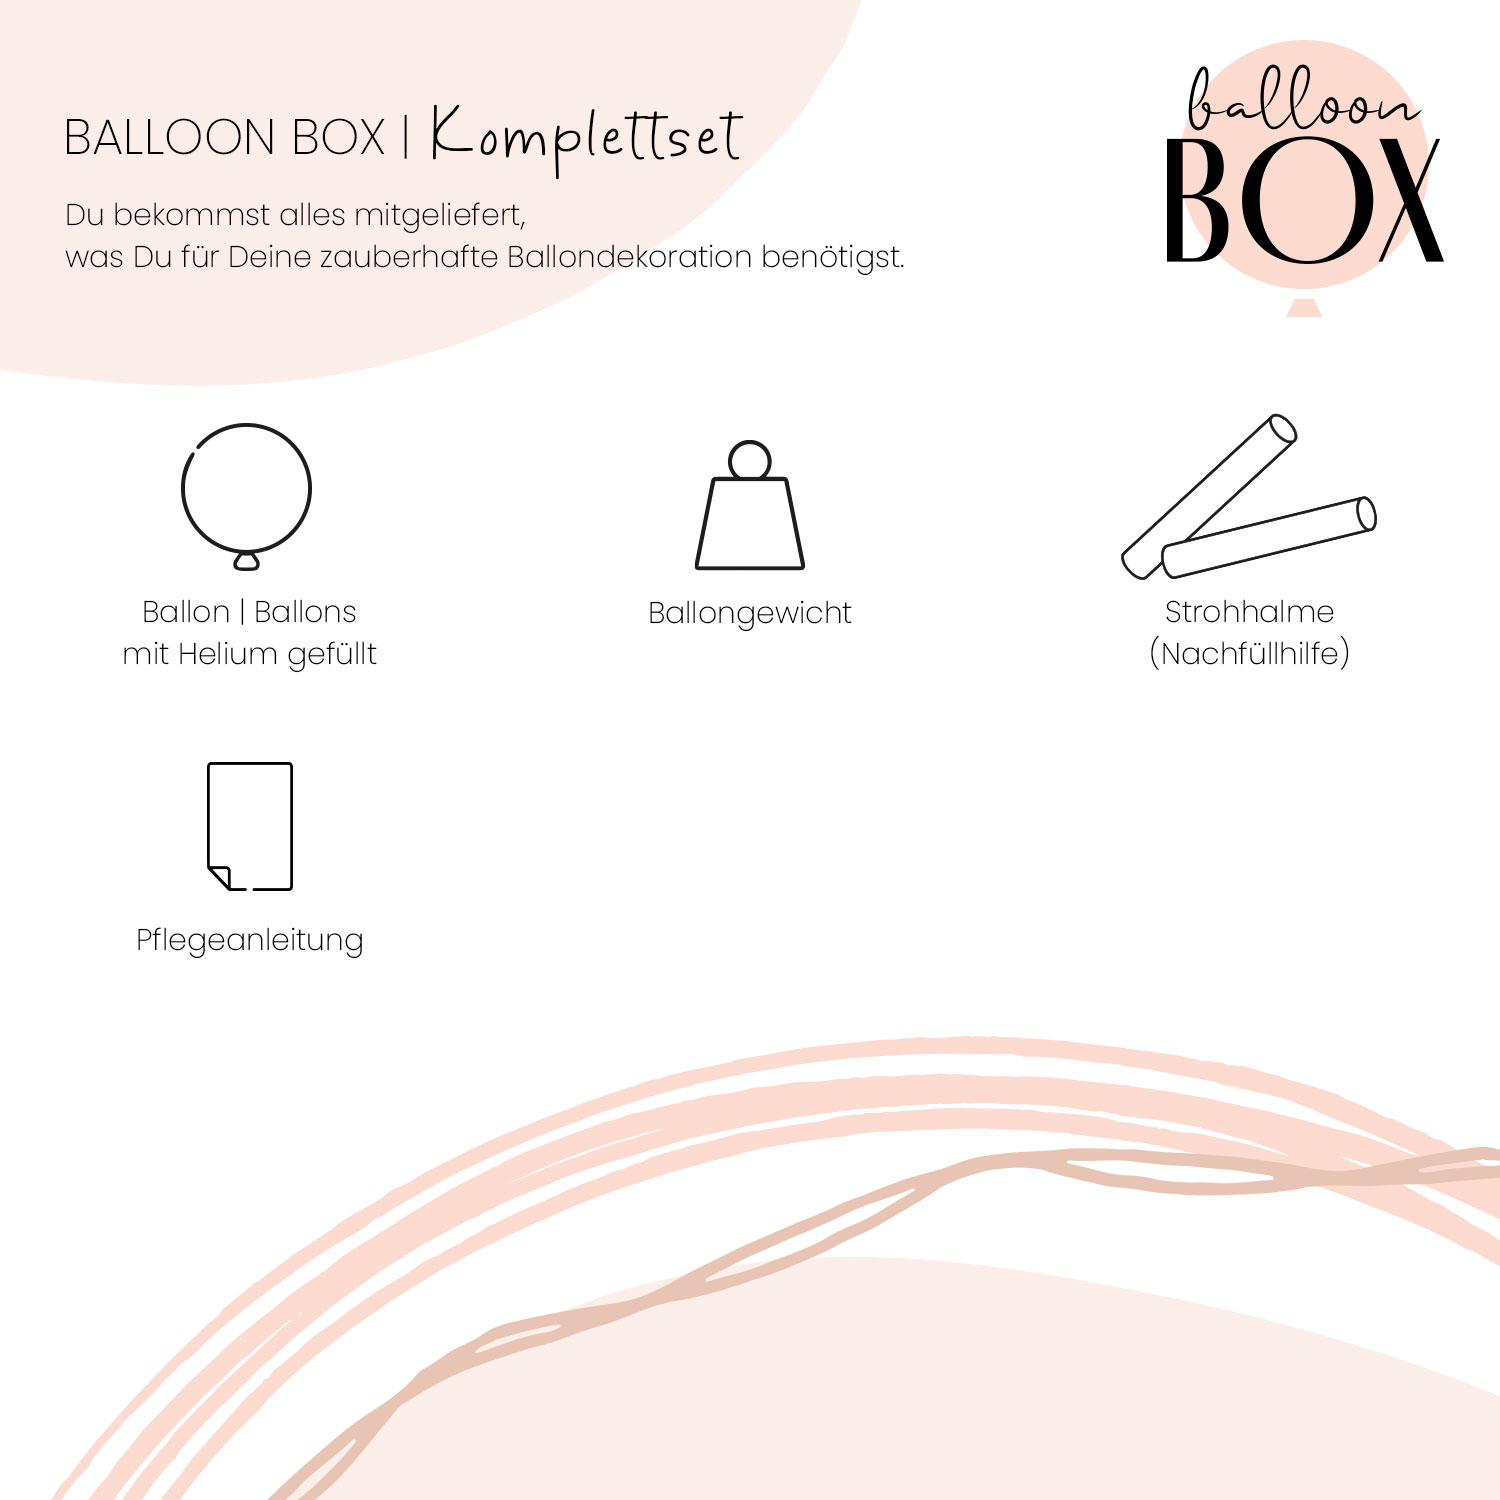 Heliumballon in a Box - Mr. & Mrs. Botanical